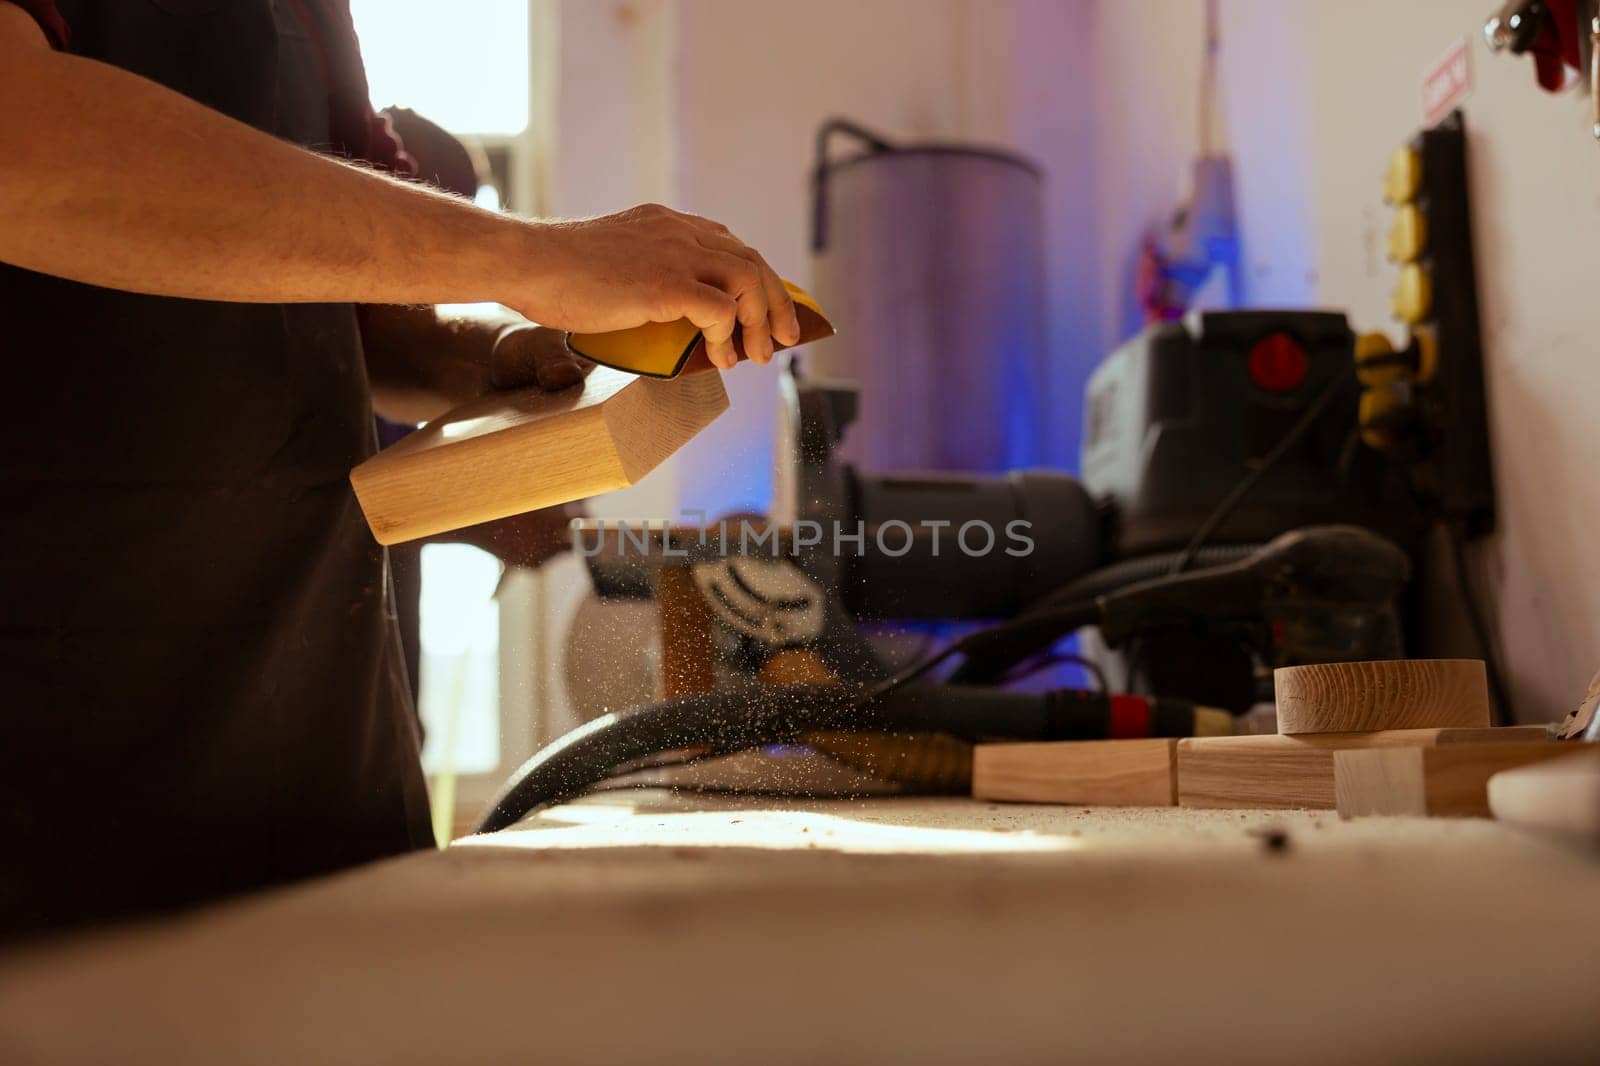 Artisan using sandpaper to sander wooden surface, enjoying diy hobby by DCStudio